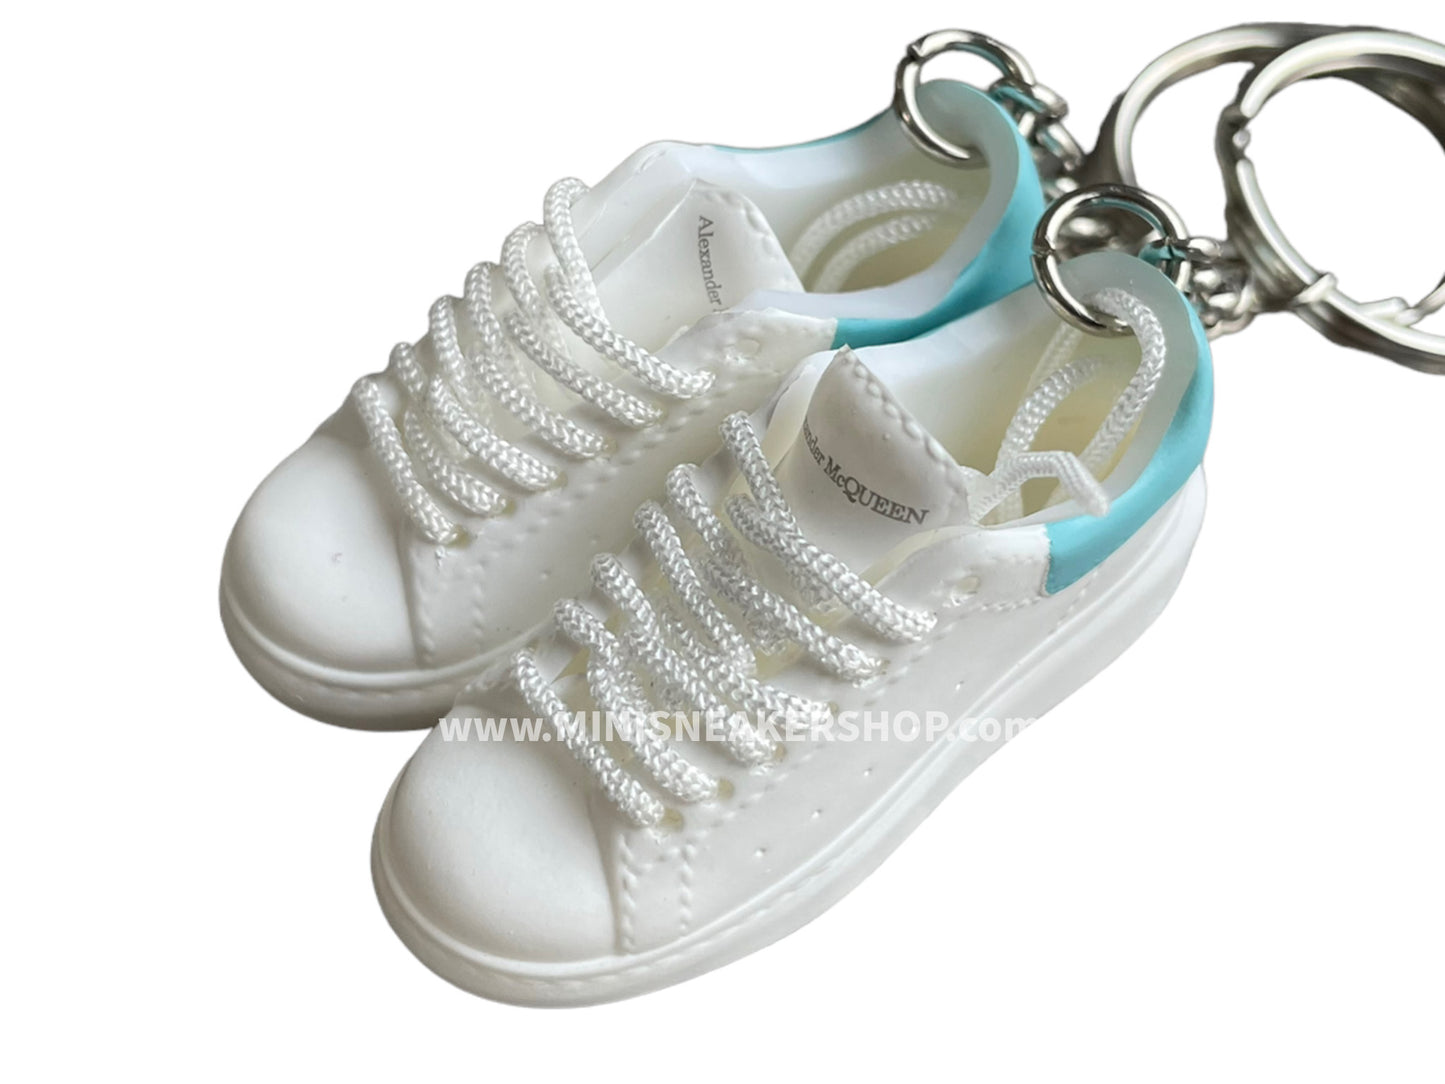 Mini sneaker keychain 3D - Alexander Mc Queen White Blue